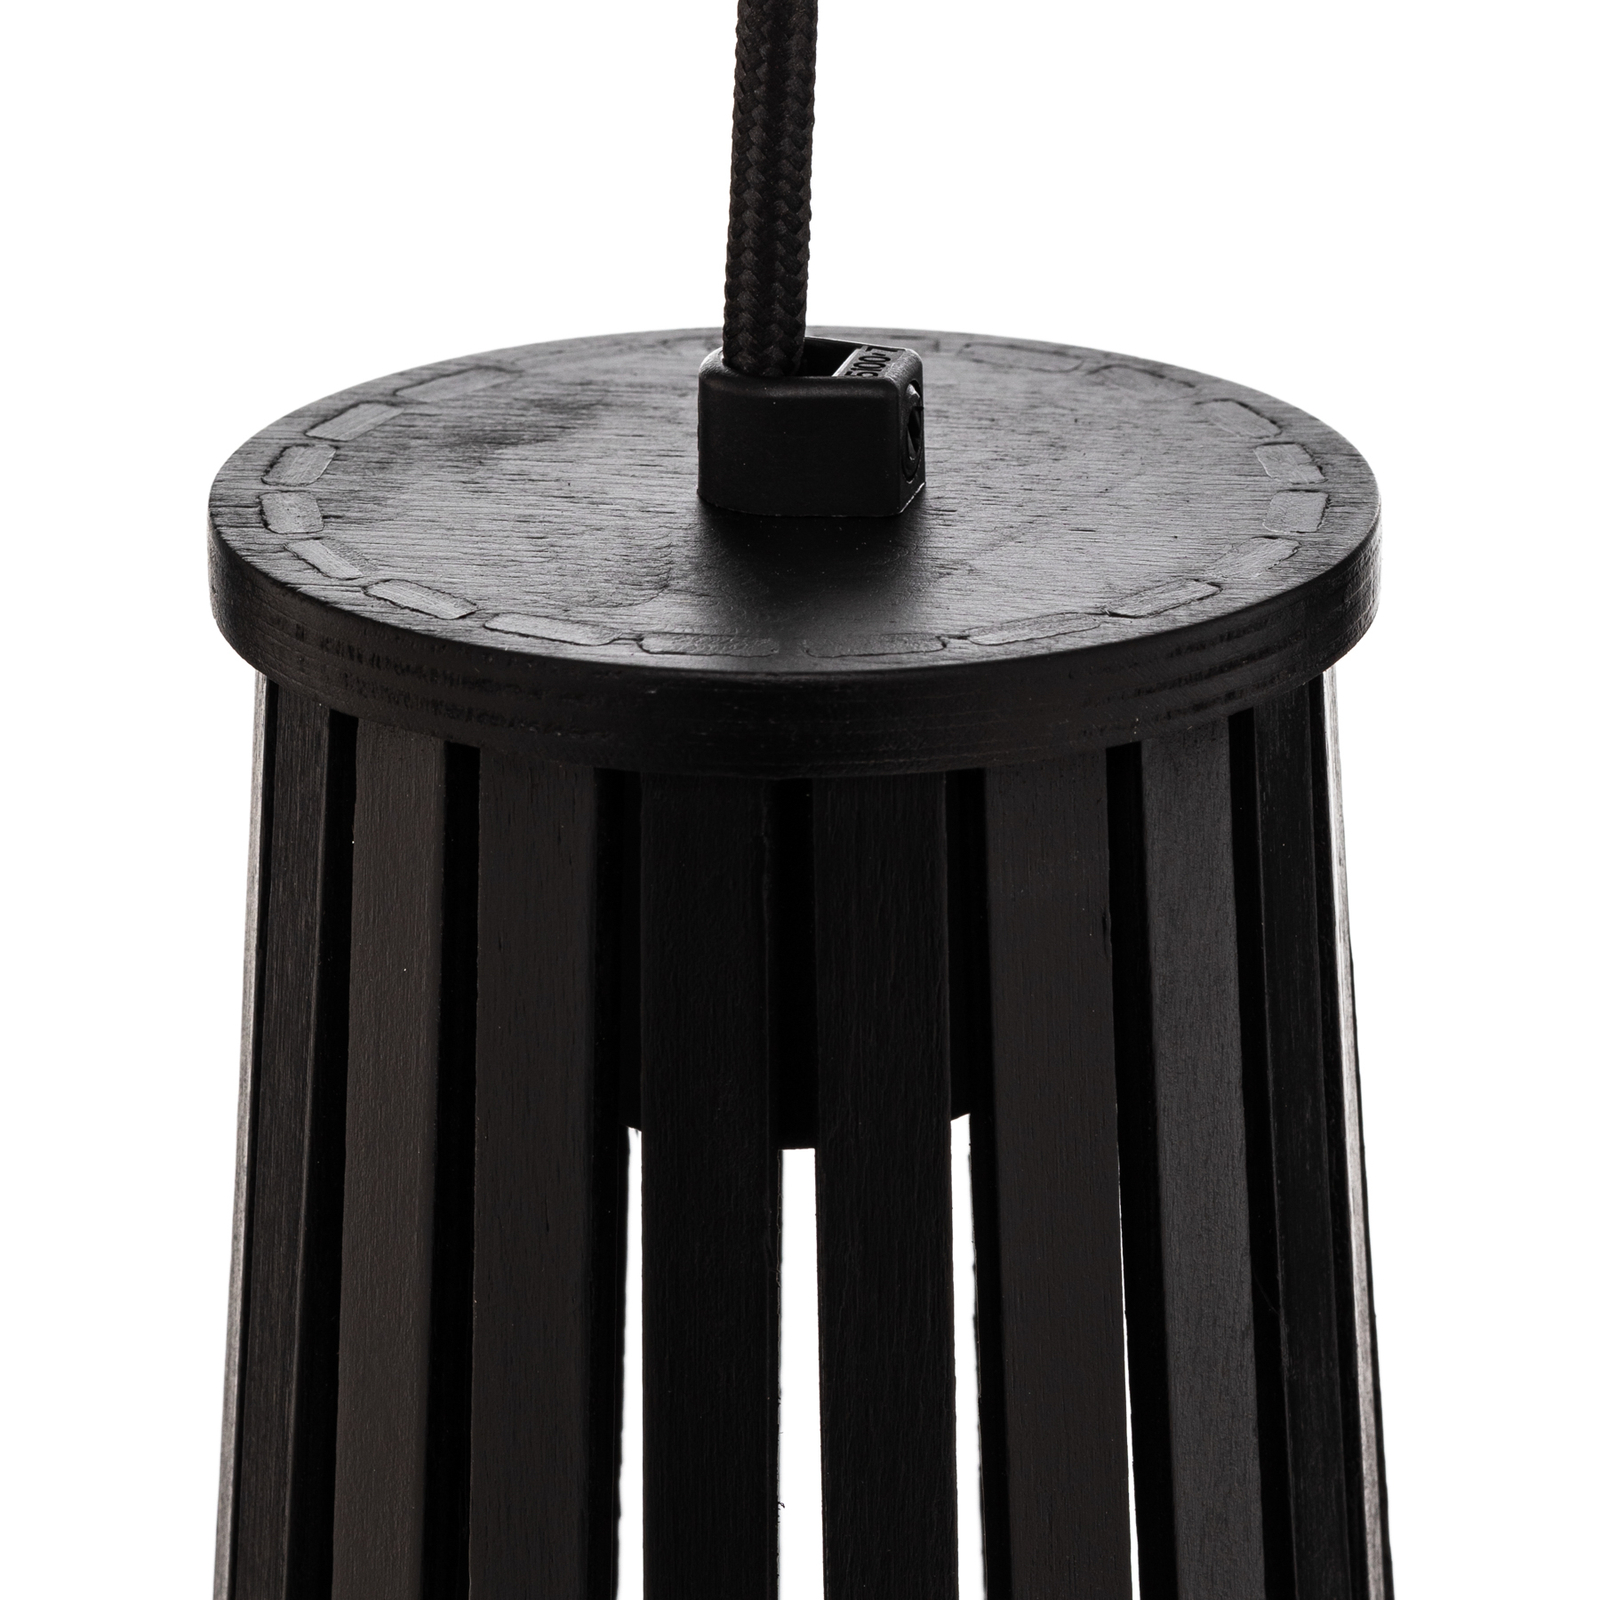 Wandlamp Dover met stekker, zwart, 1-lamp